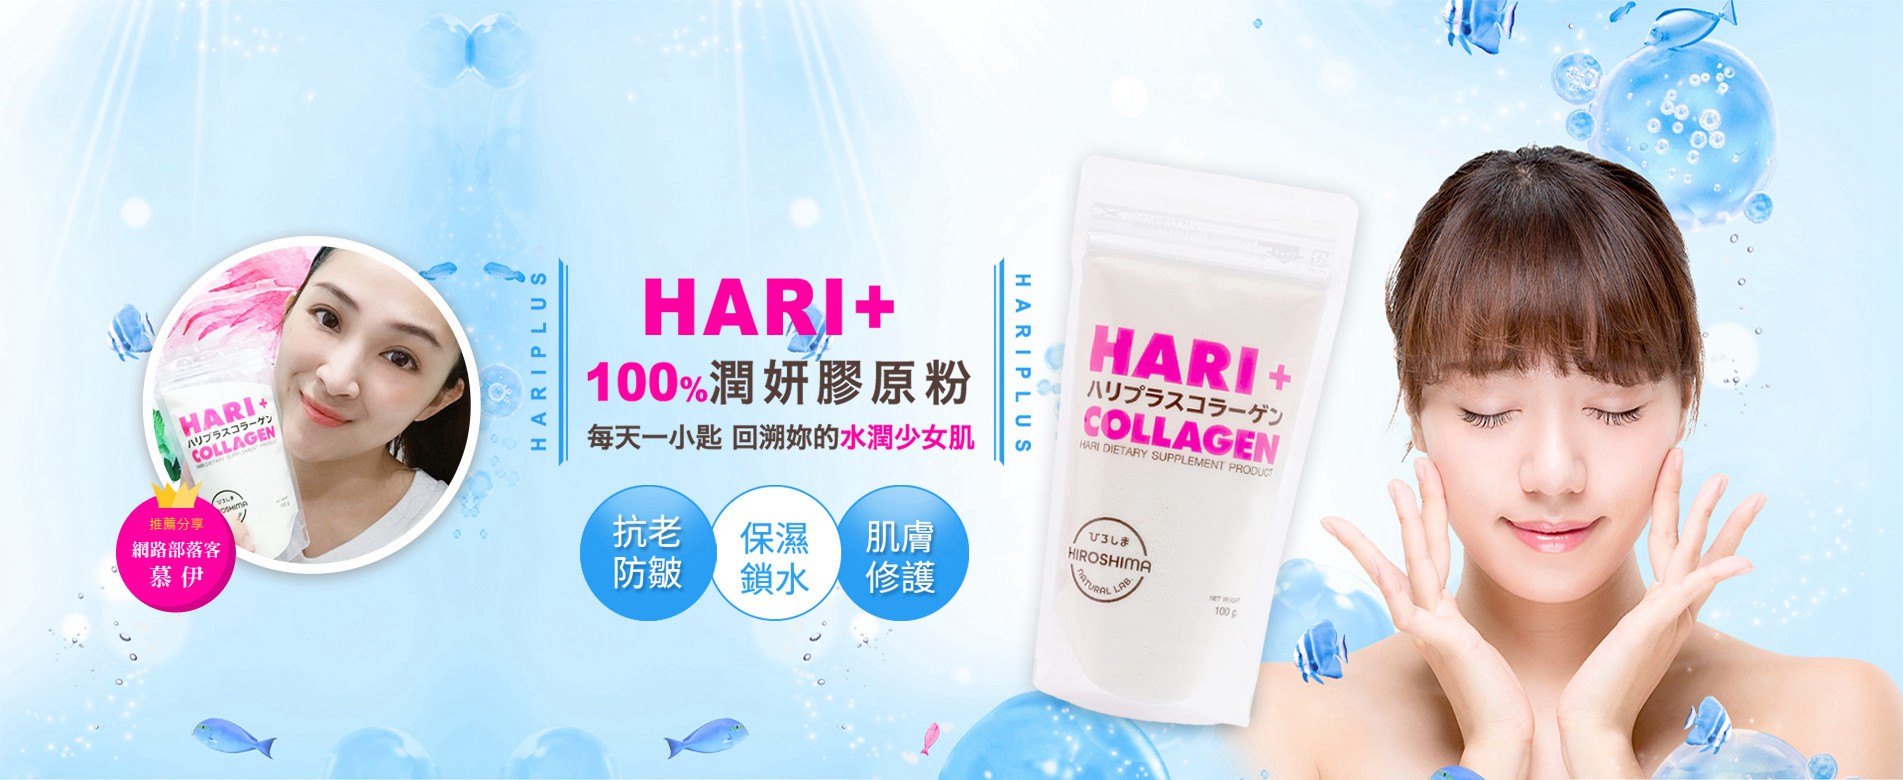 HARI+100%潤妍膠原粉